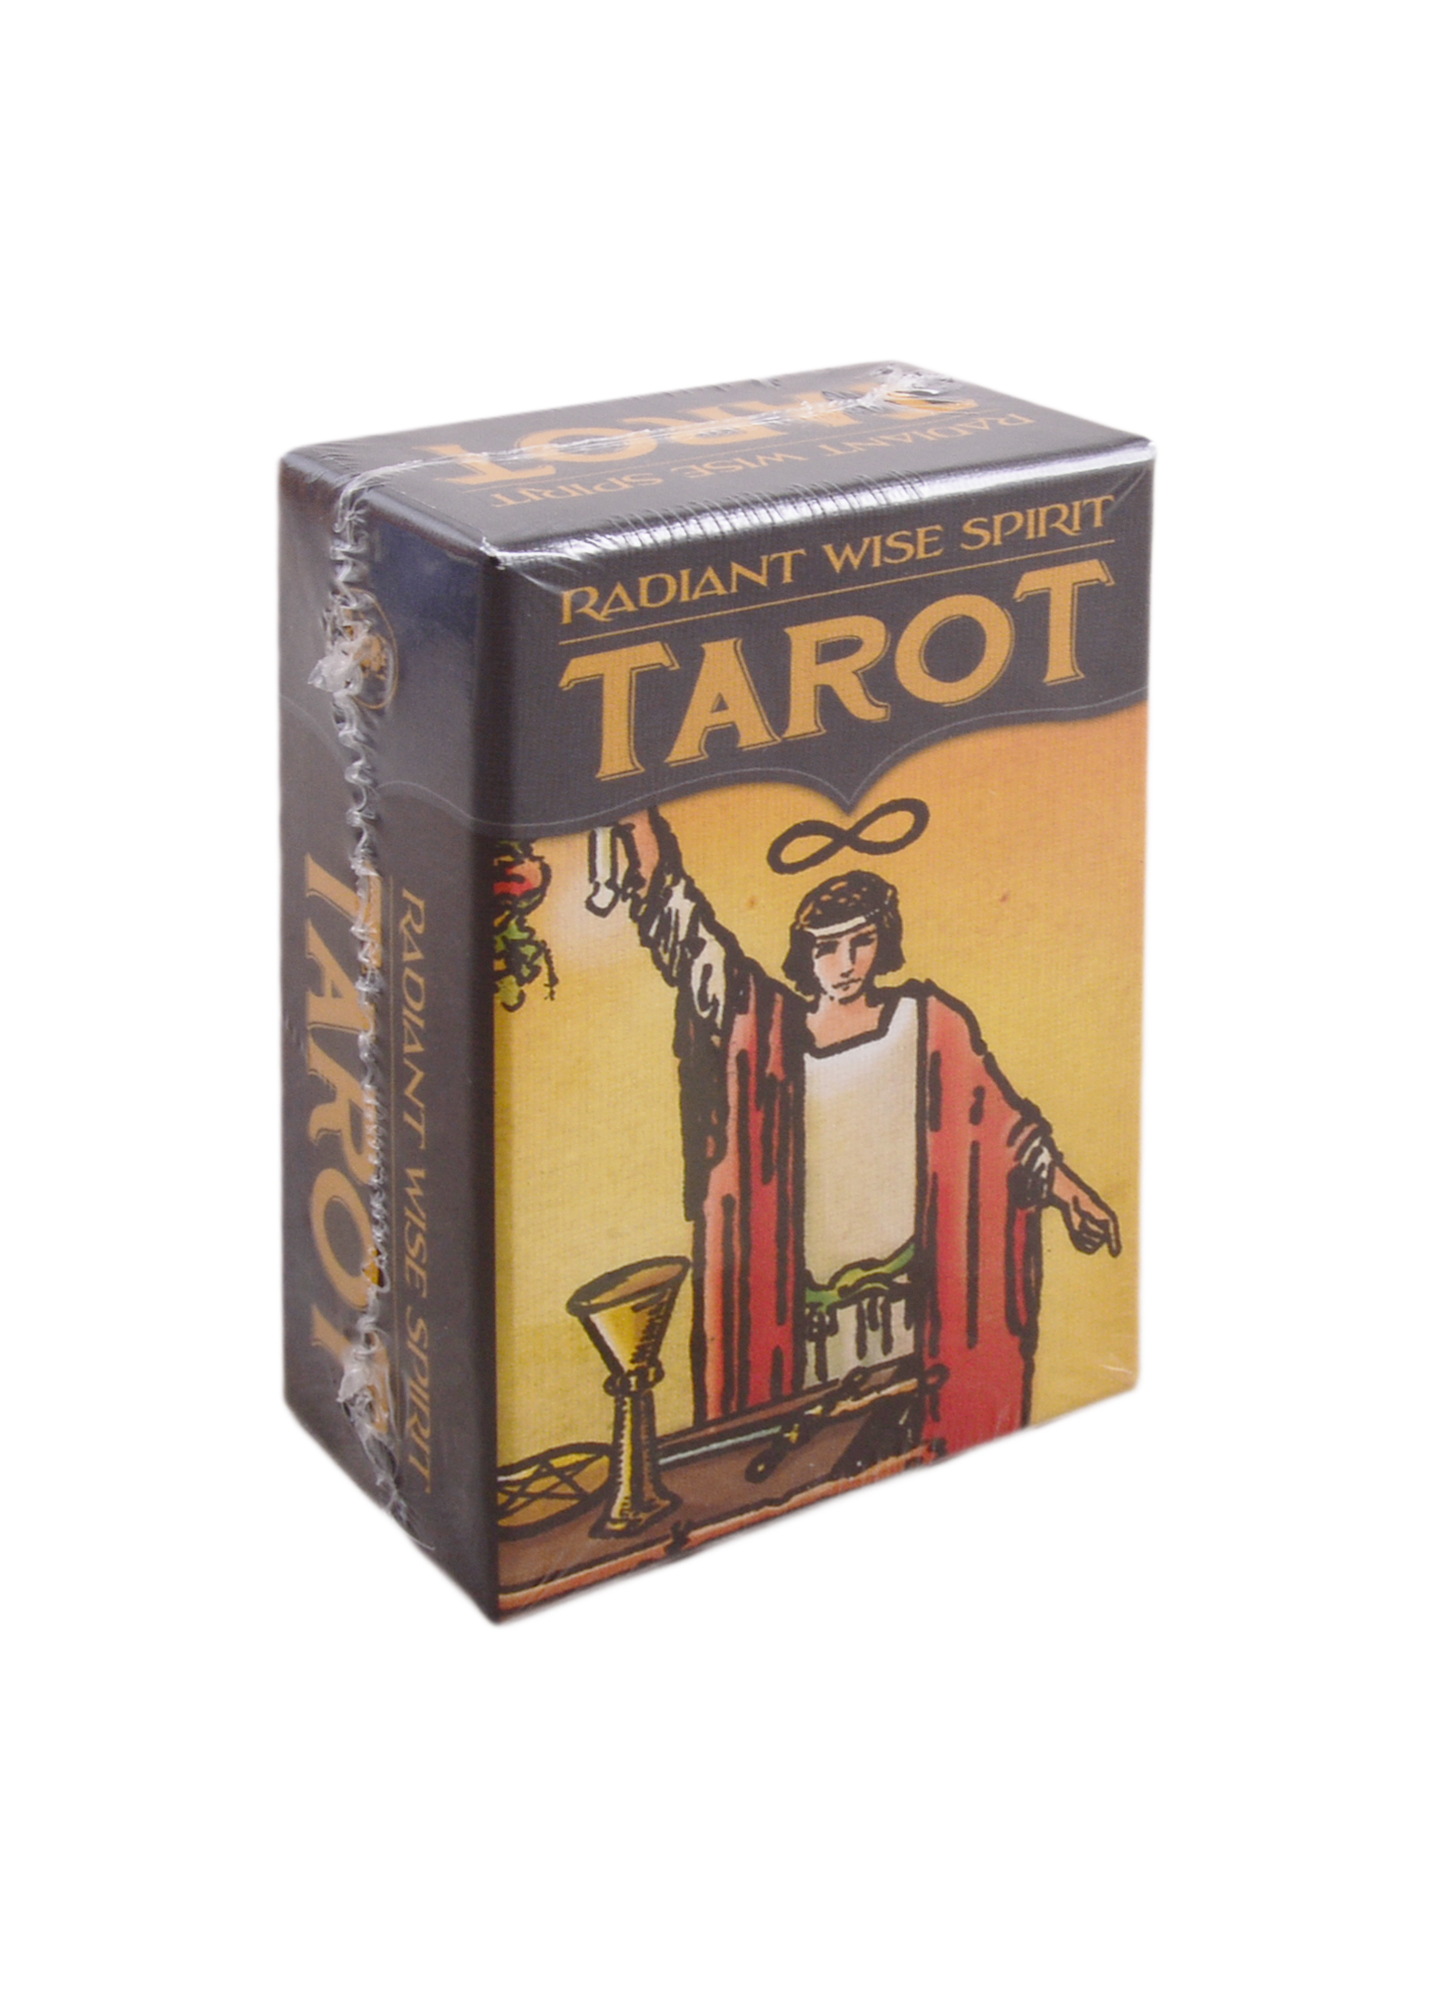 Radiant Wise Spirit Tarot waite arthur edward graham sasha radiant wise spirit tarot